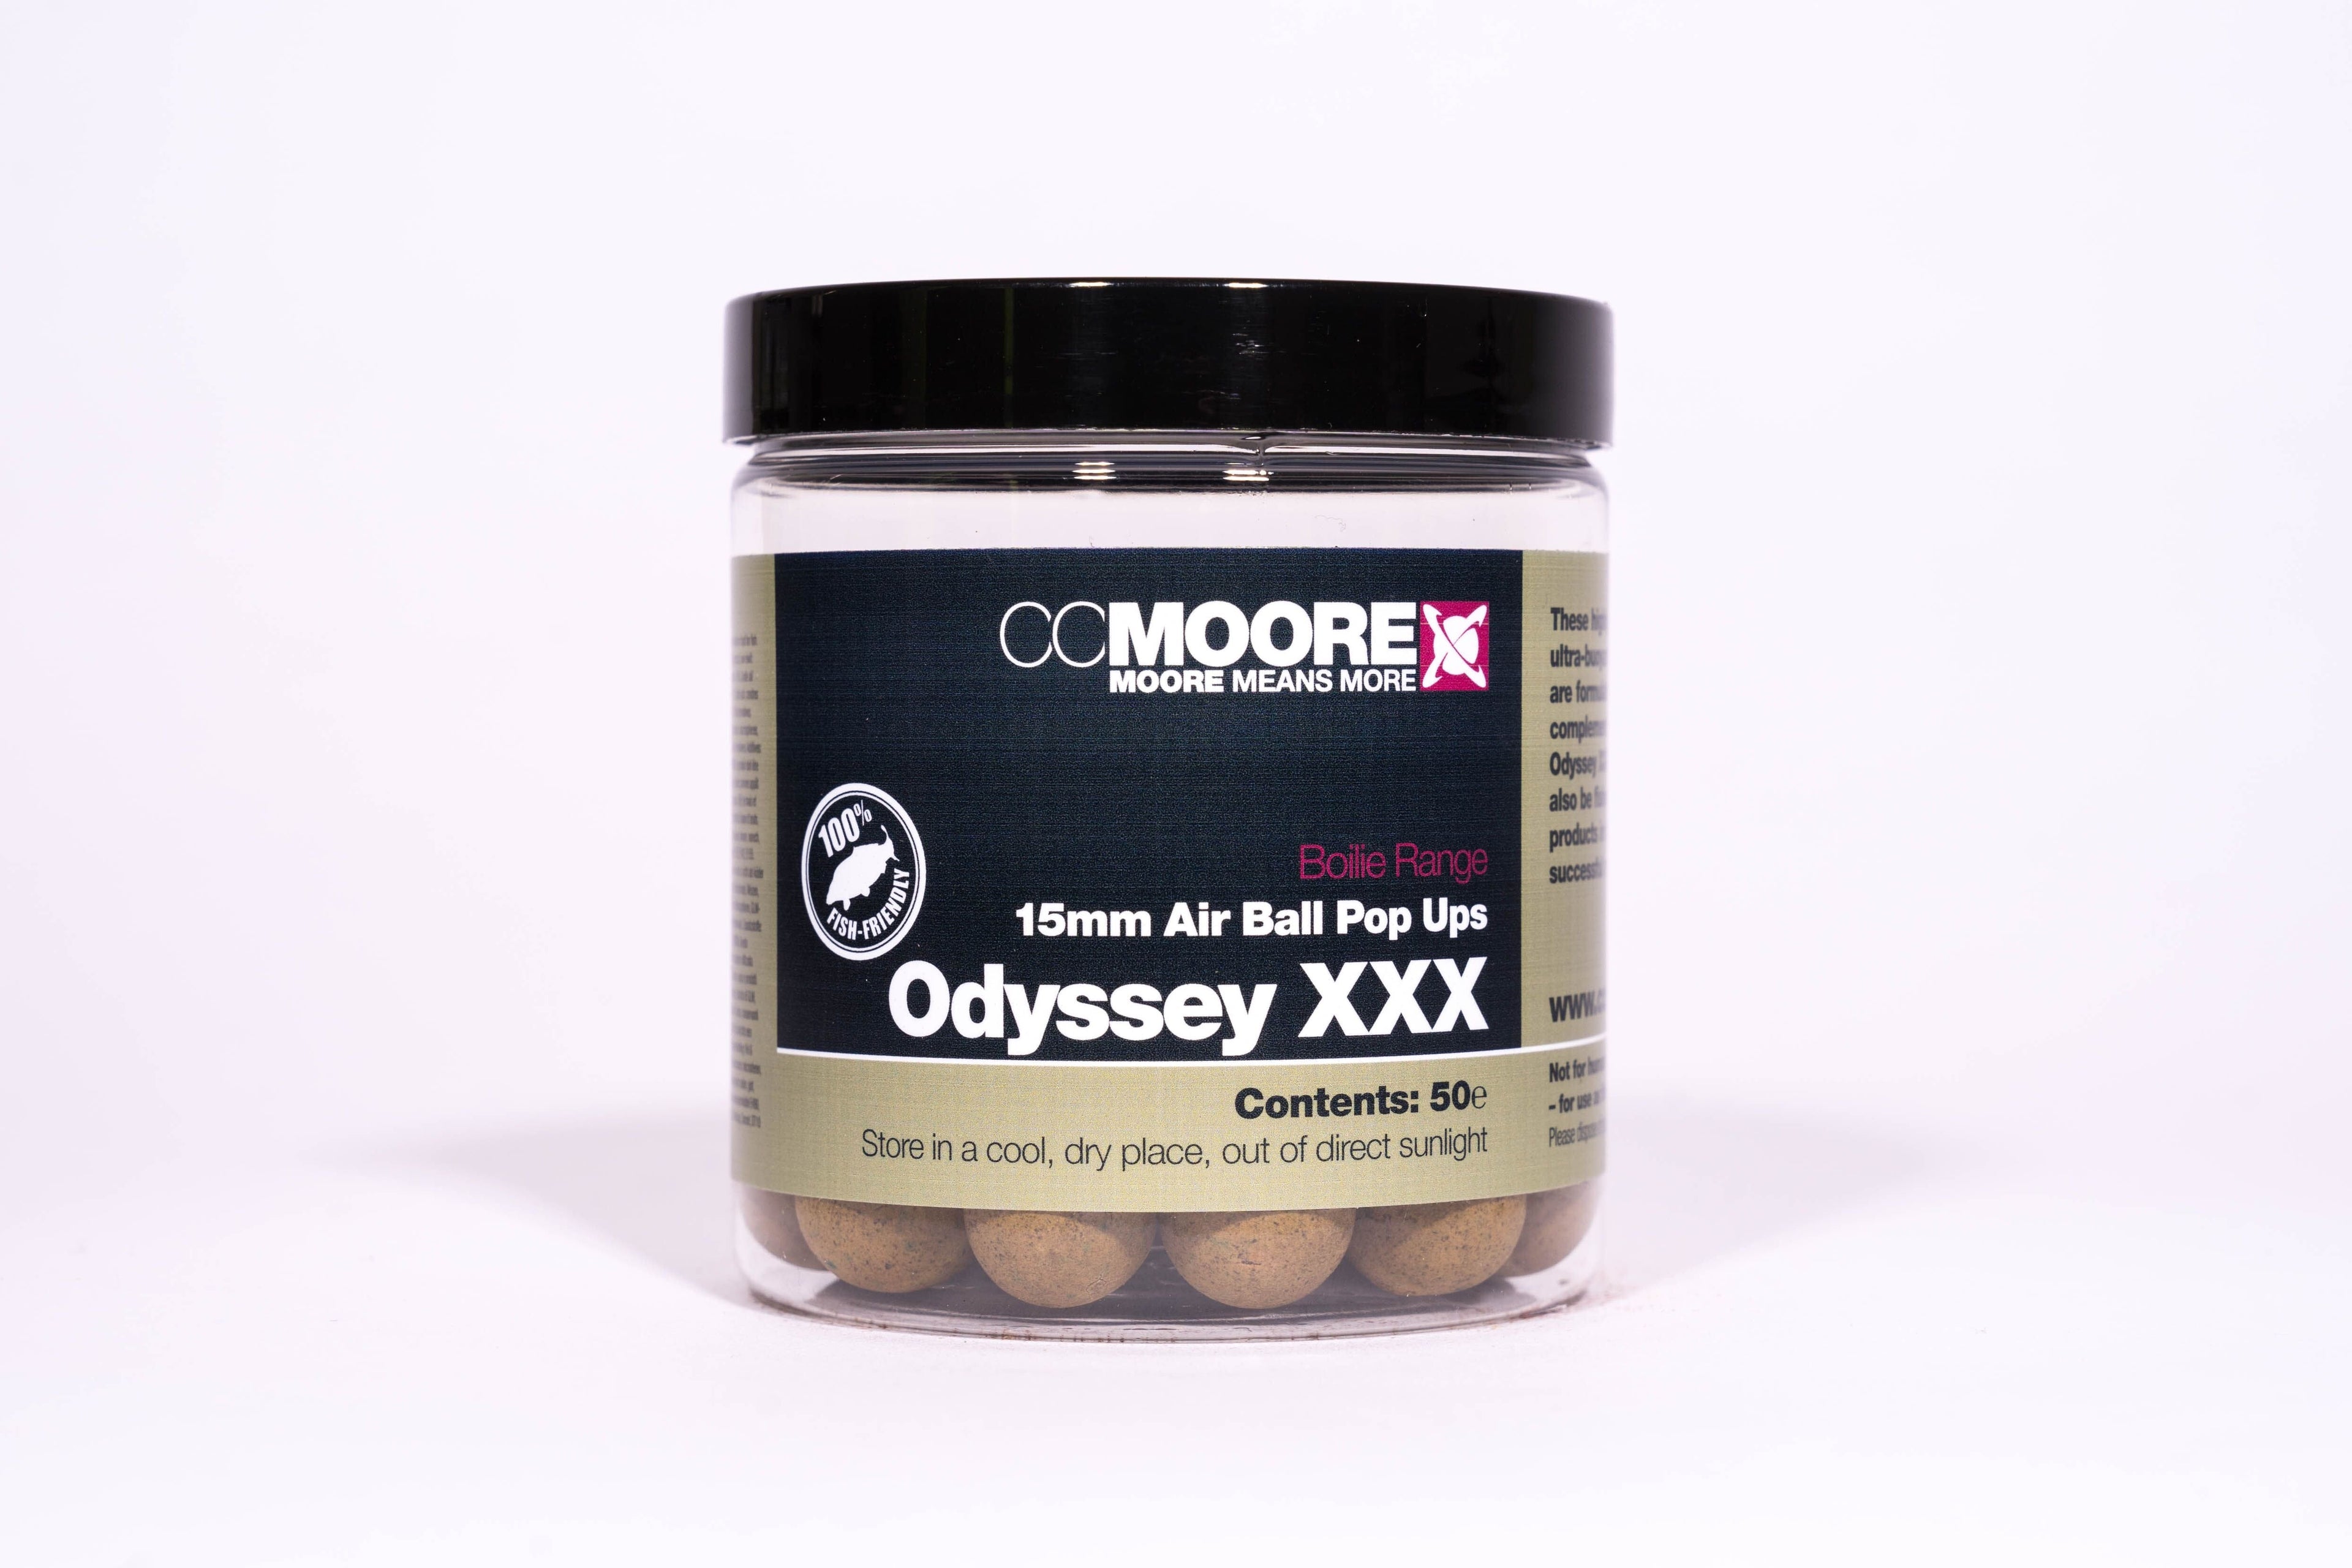 CC Moore Odyssey XXX Air Ball Pop Ups 15mm